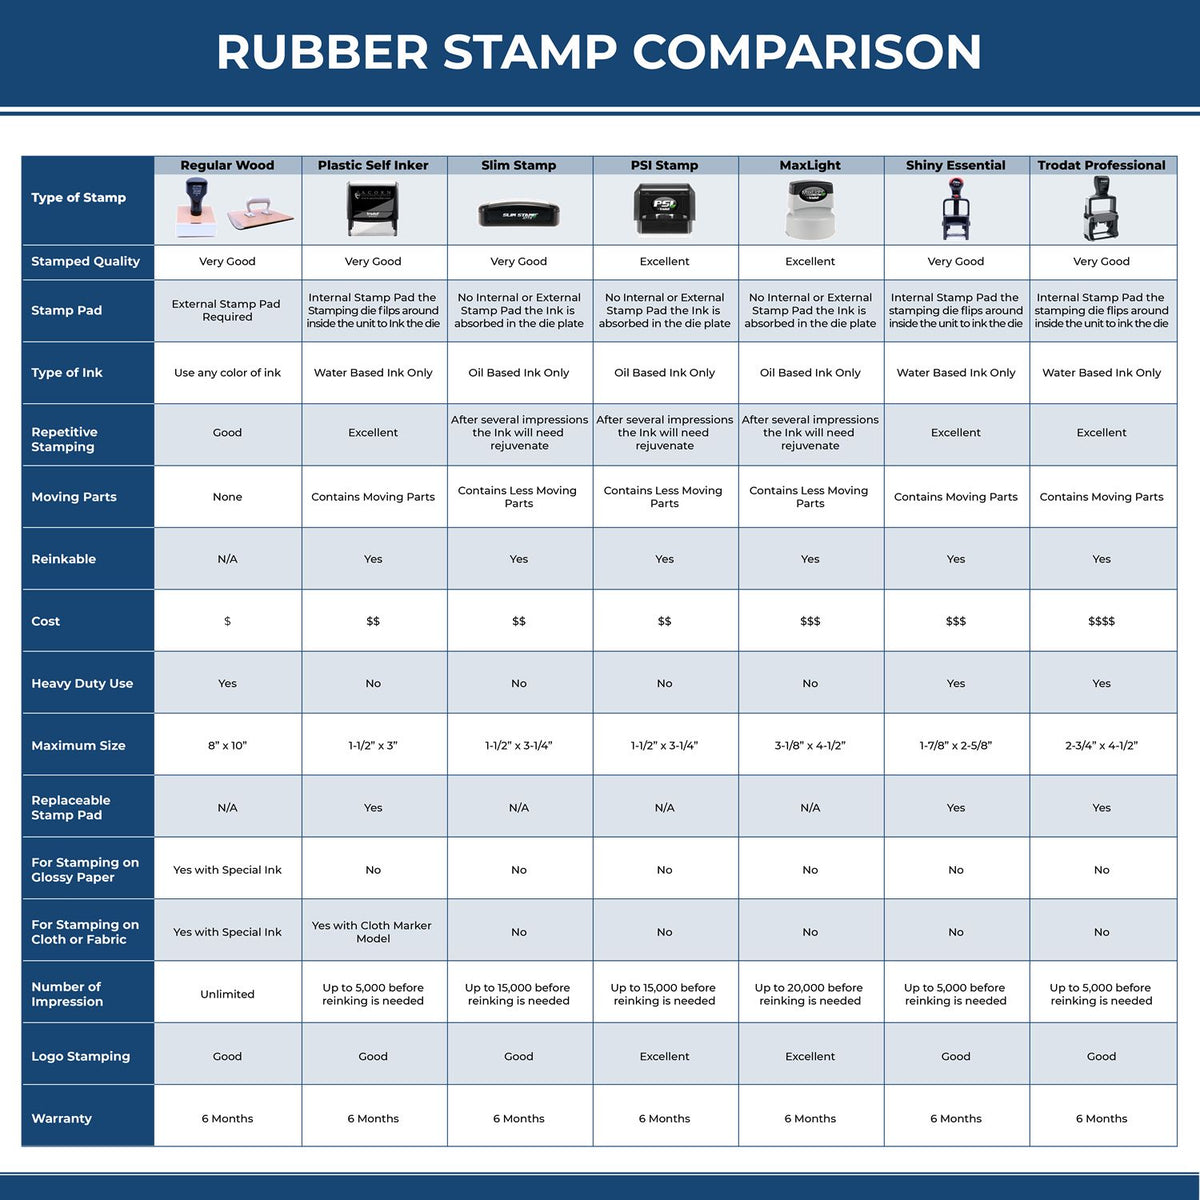 Large Self-Inking Return for Better Address Stamp 4970S Rubber Stamp Comparison